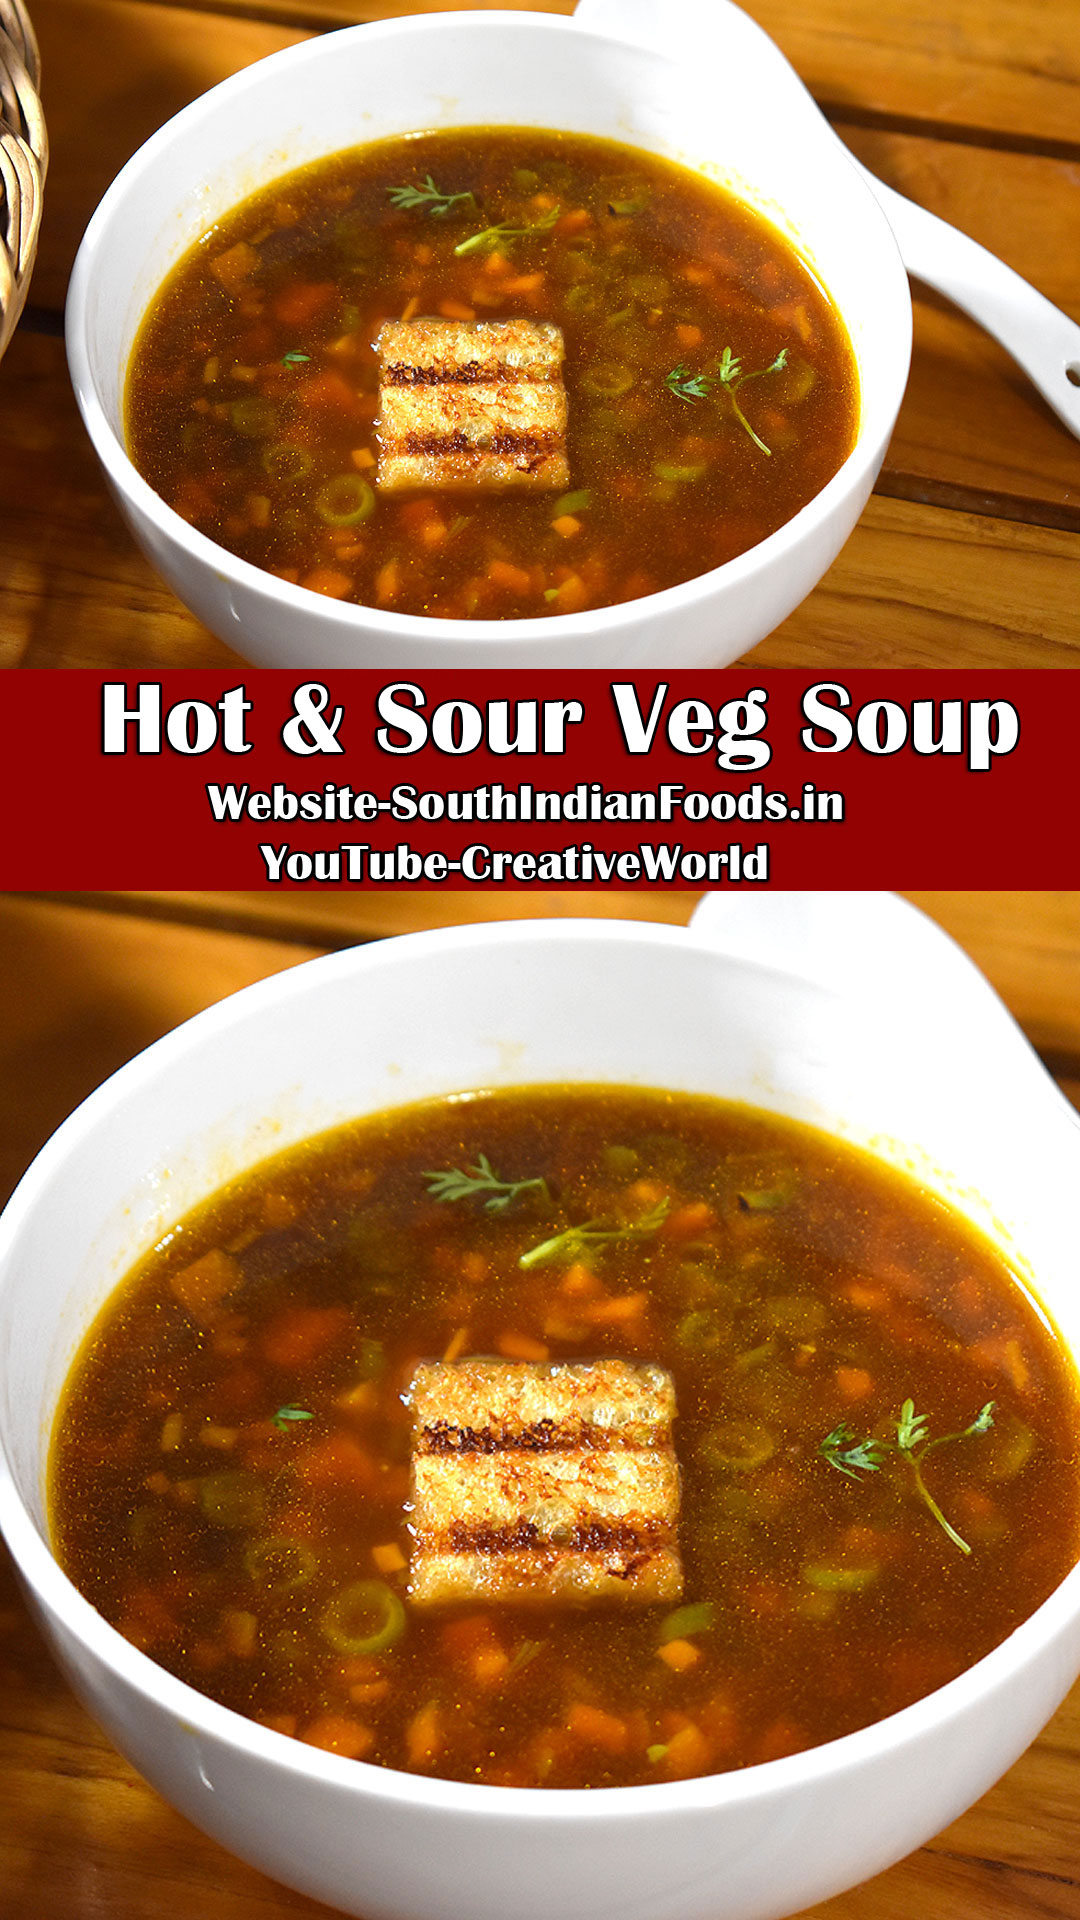 Hot and sour veg soup